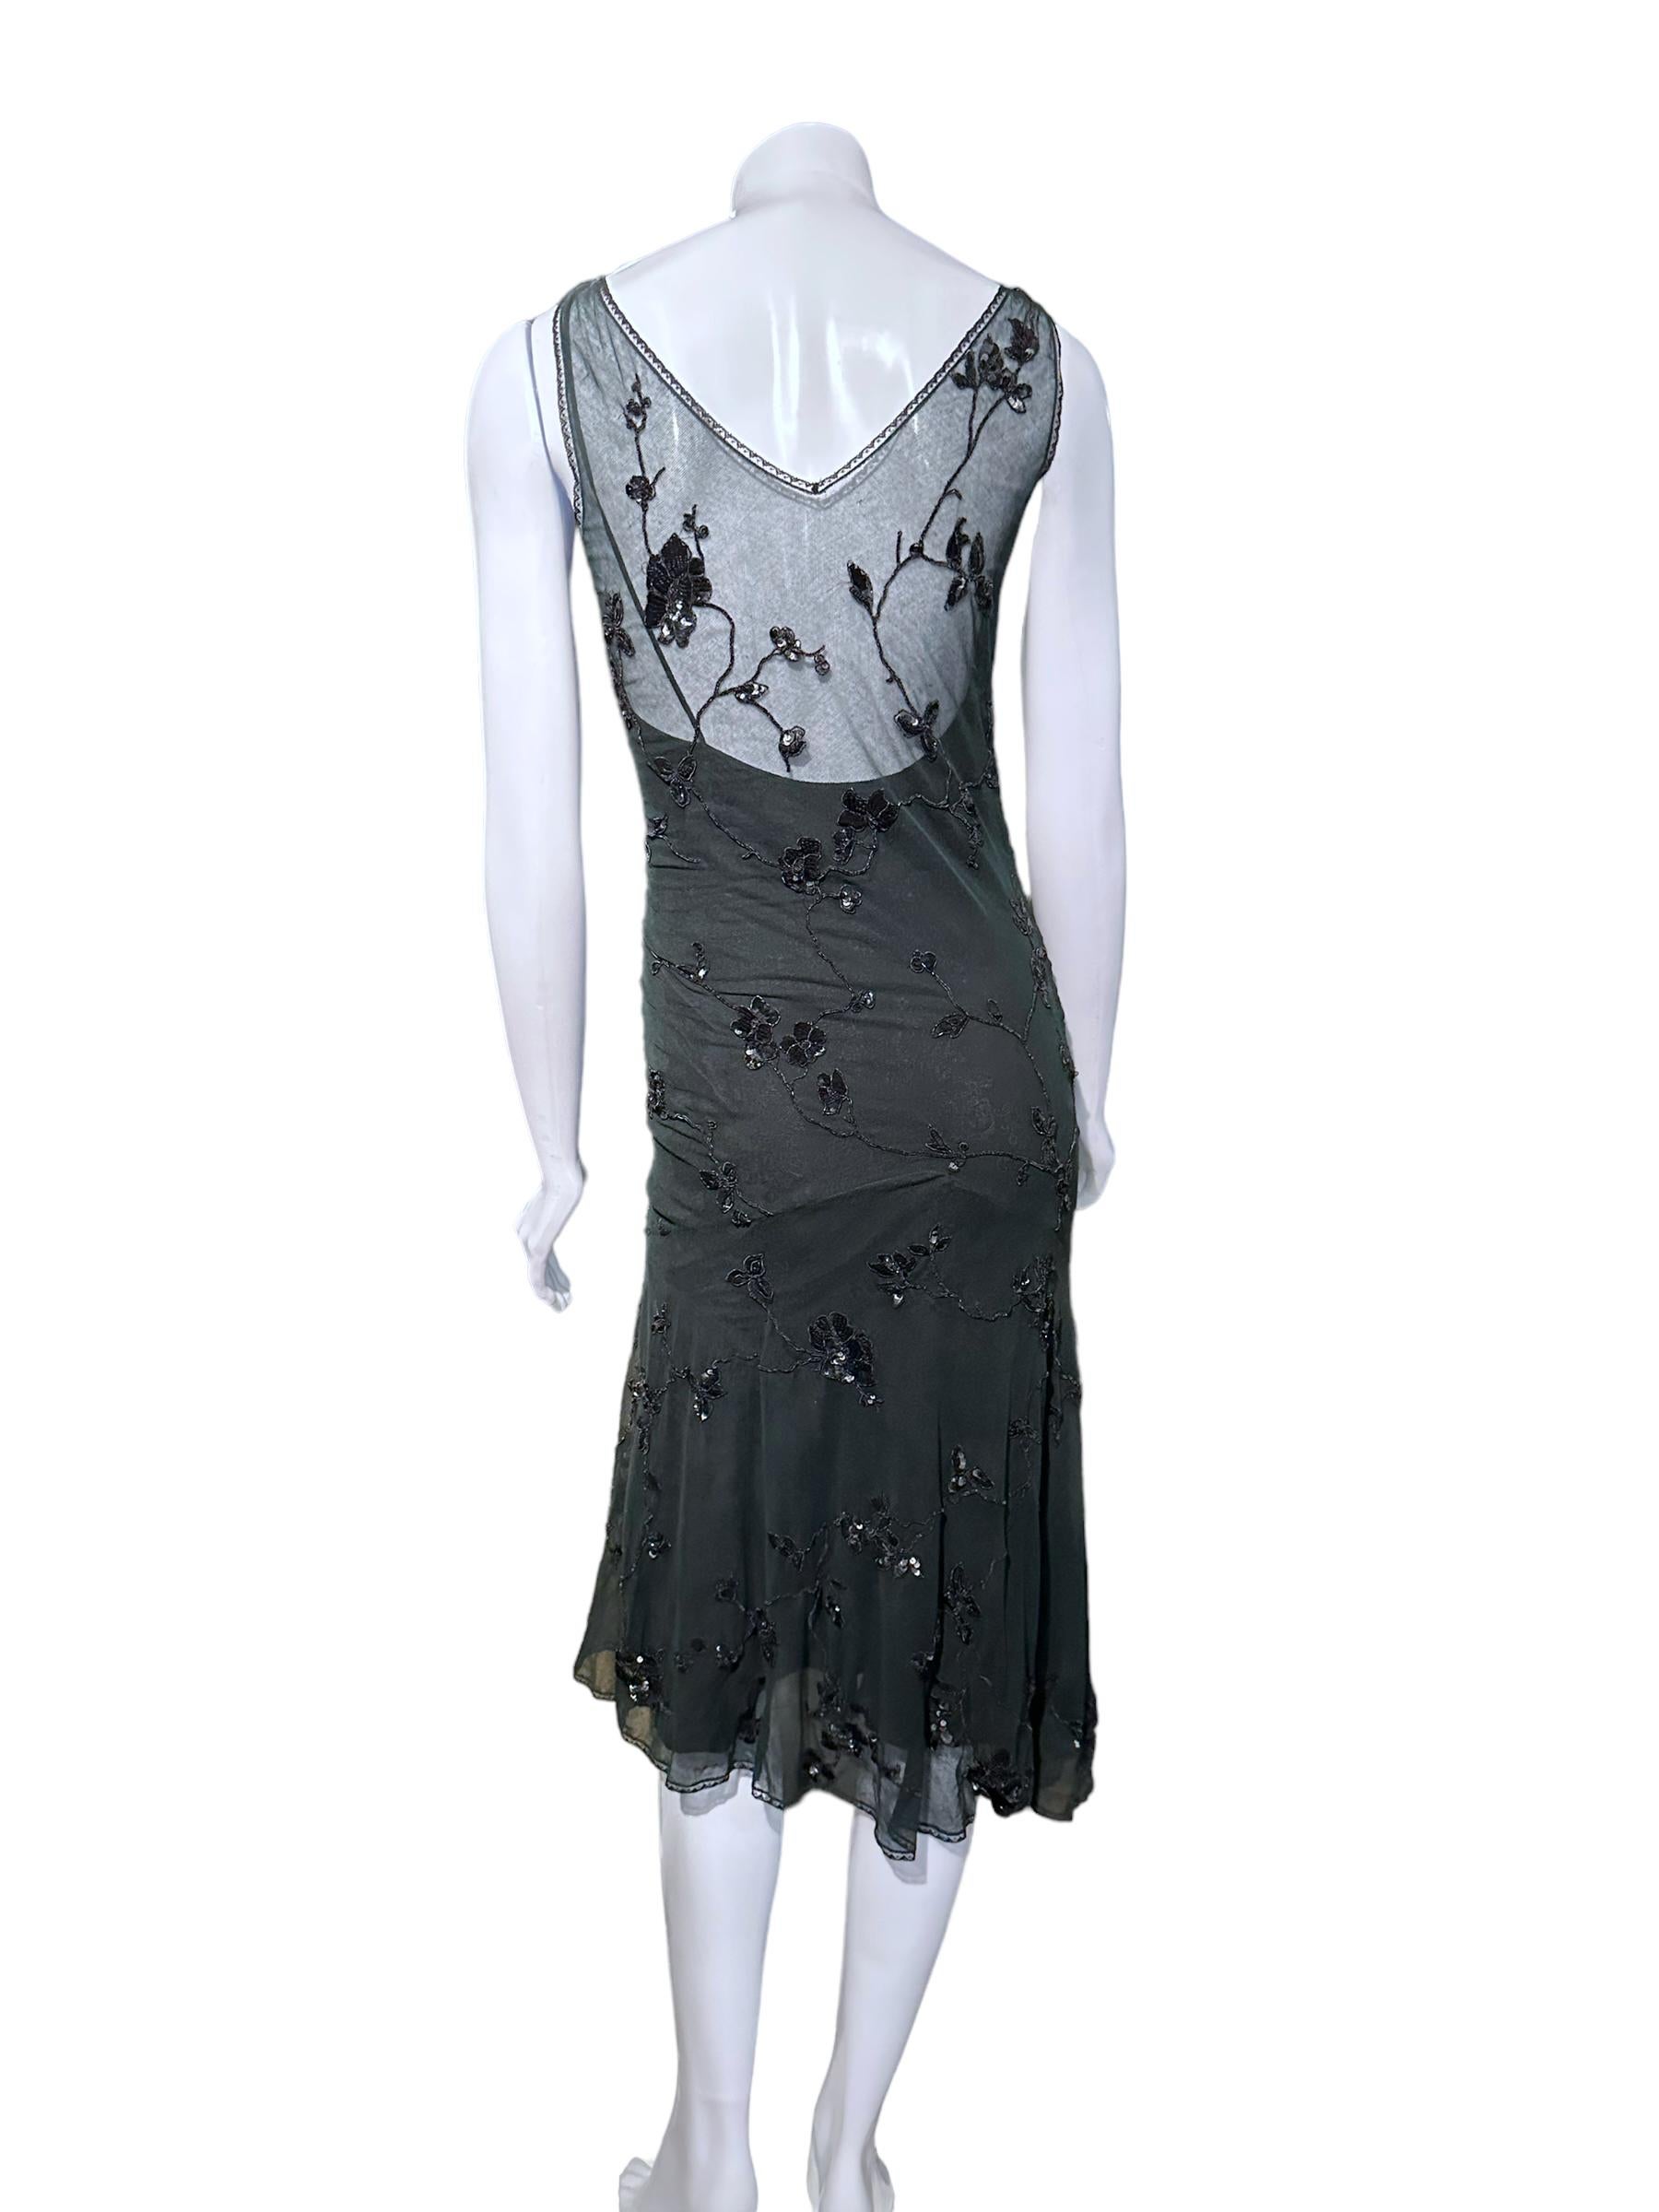 Women's Christian Dior By John Galliano Ss 1998 Beaded Tulle Overlay Slip Dress For Sale